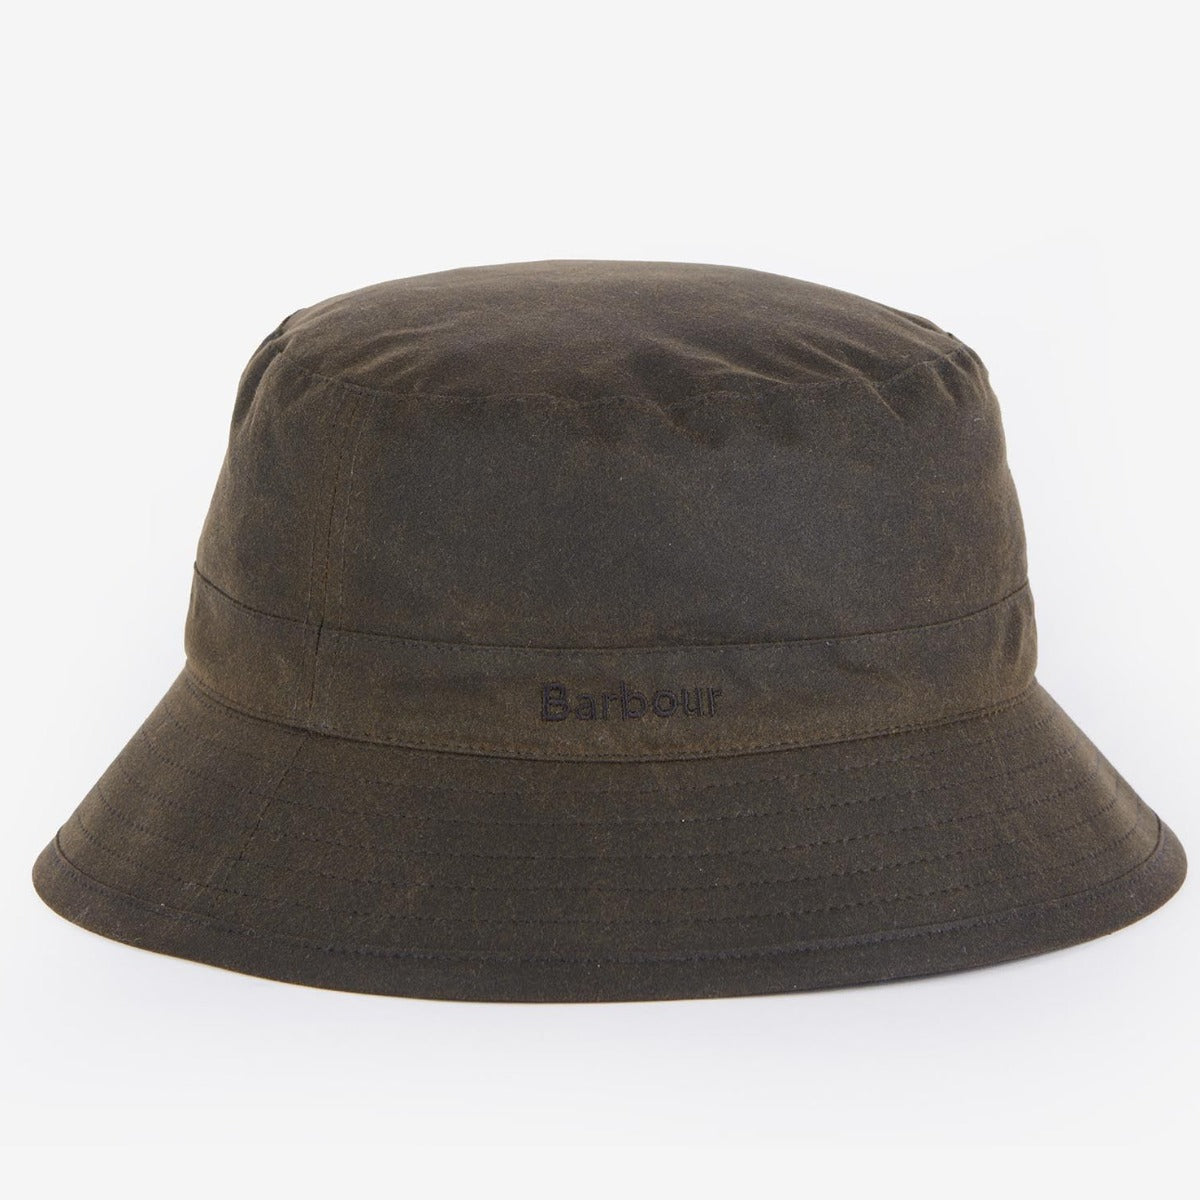 Barbour x BSTN Brand Bucket Hat Men Hats Black in Size:L/XL